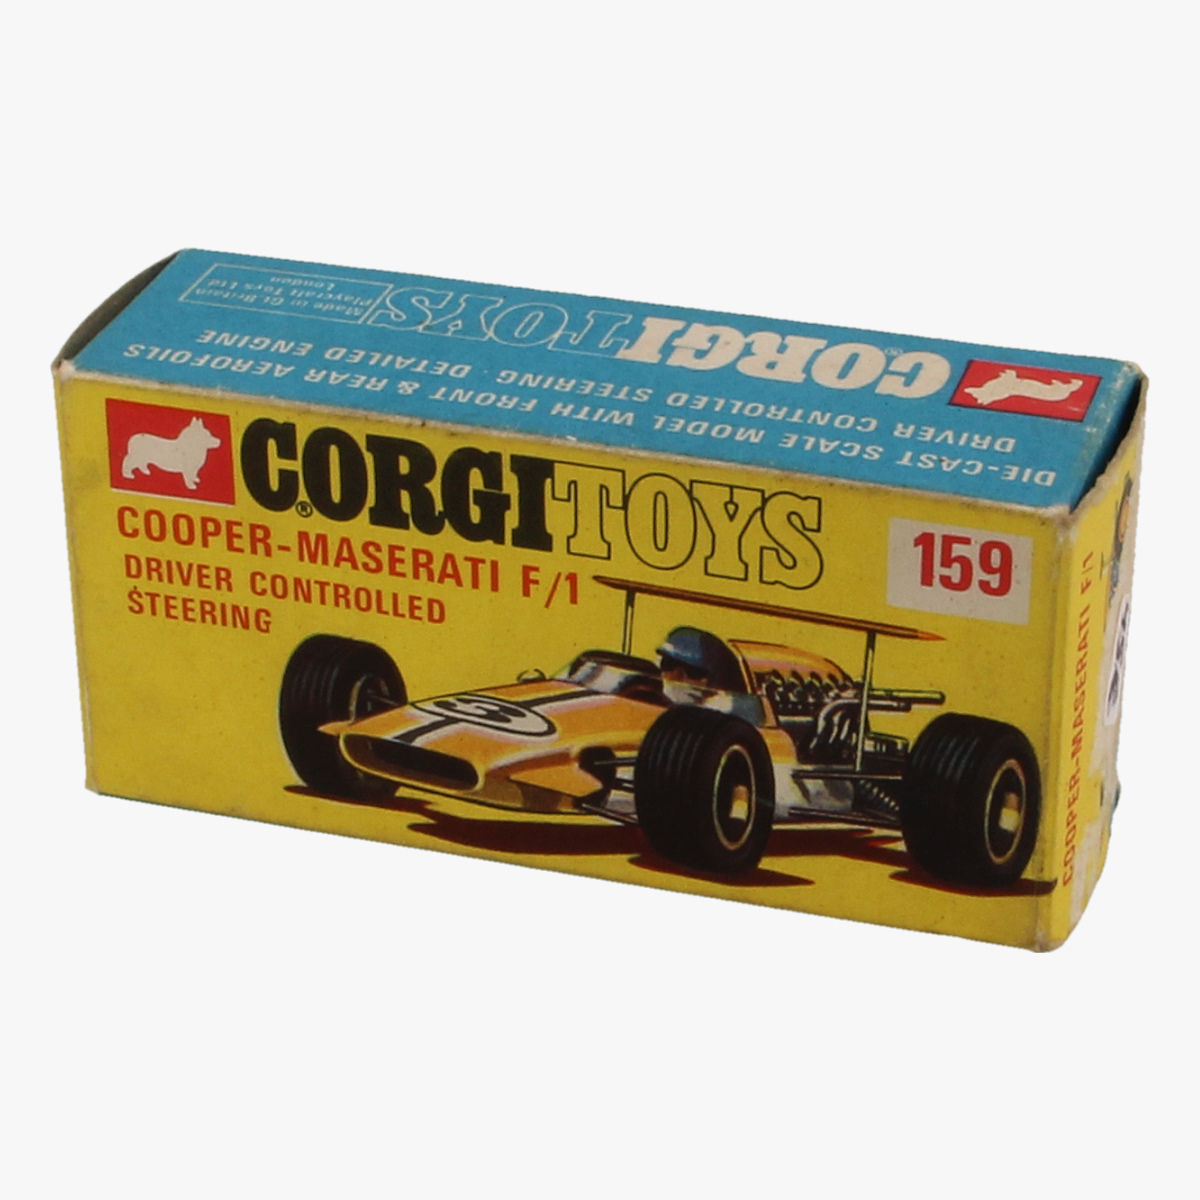 Afbeeldingen van Corgi Toys. Cooper Maserati F/1 Nr. 159